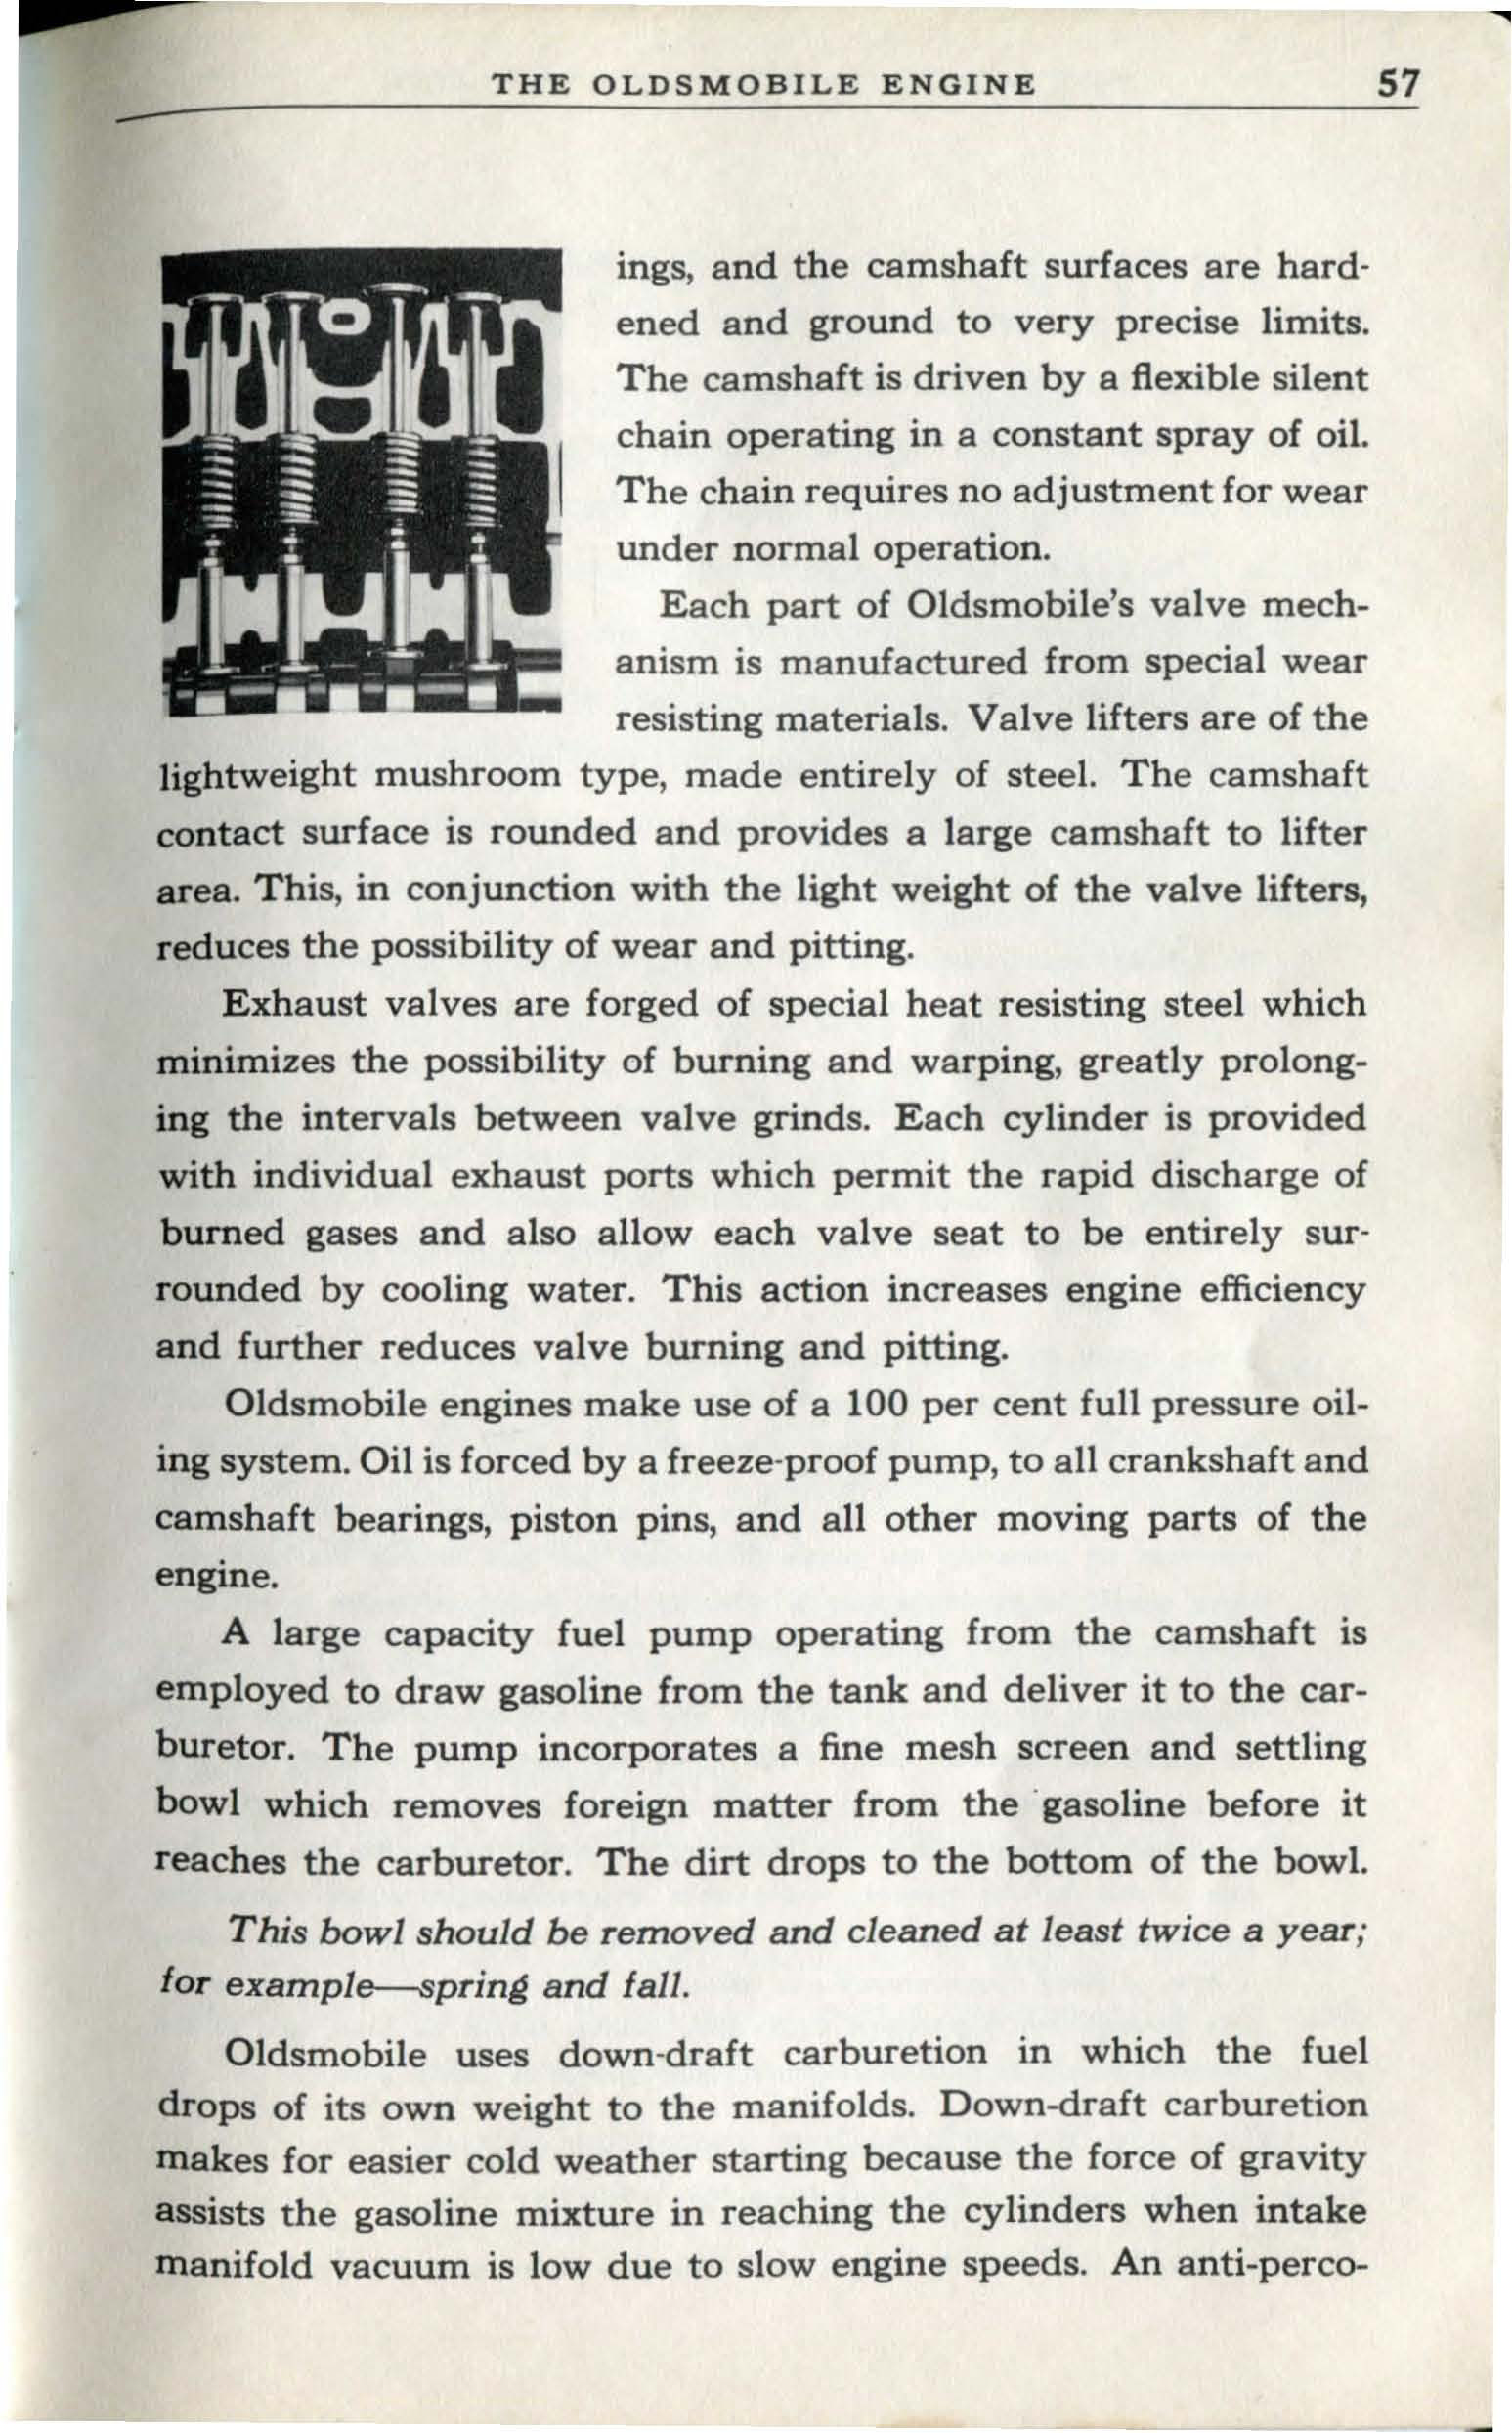 1940_Oldsmobile_Operating_Guide-59